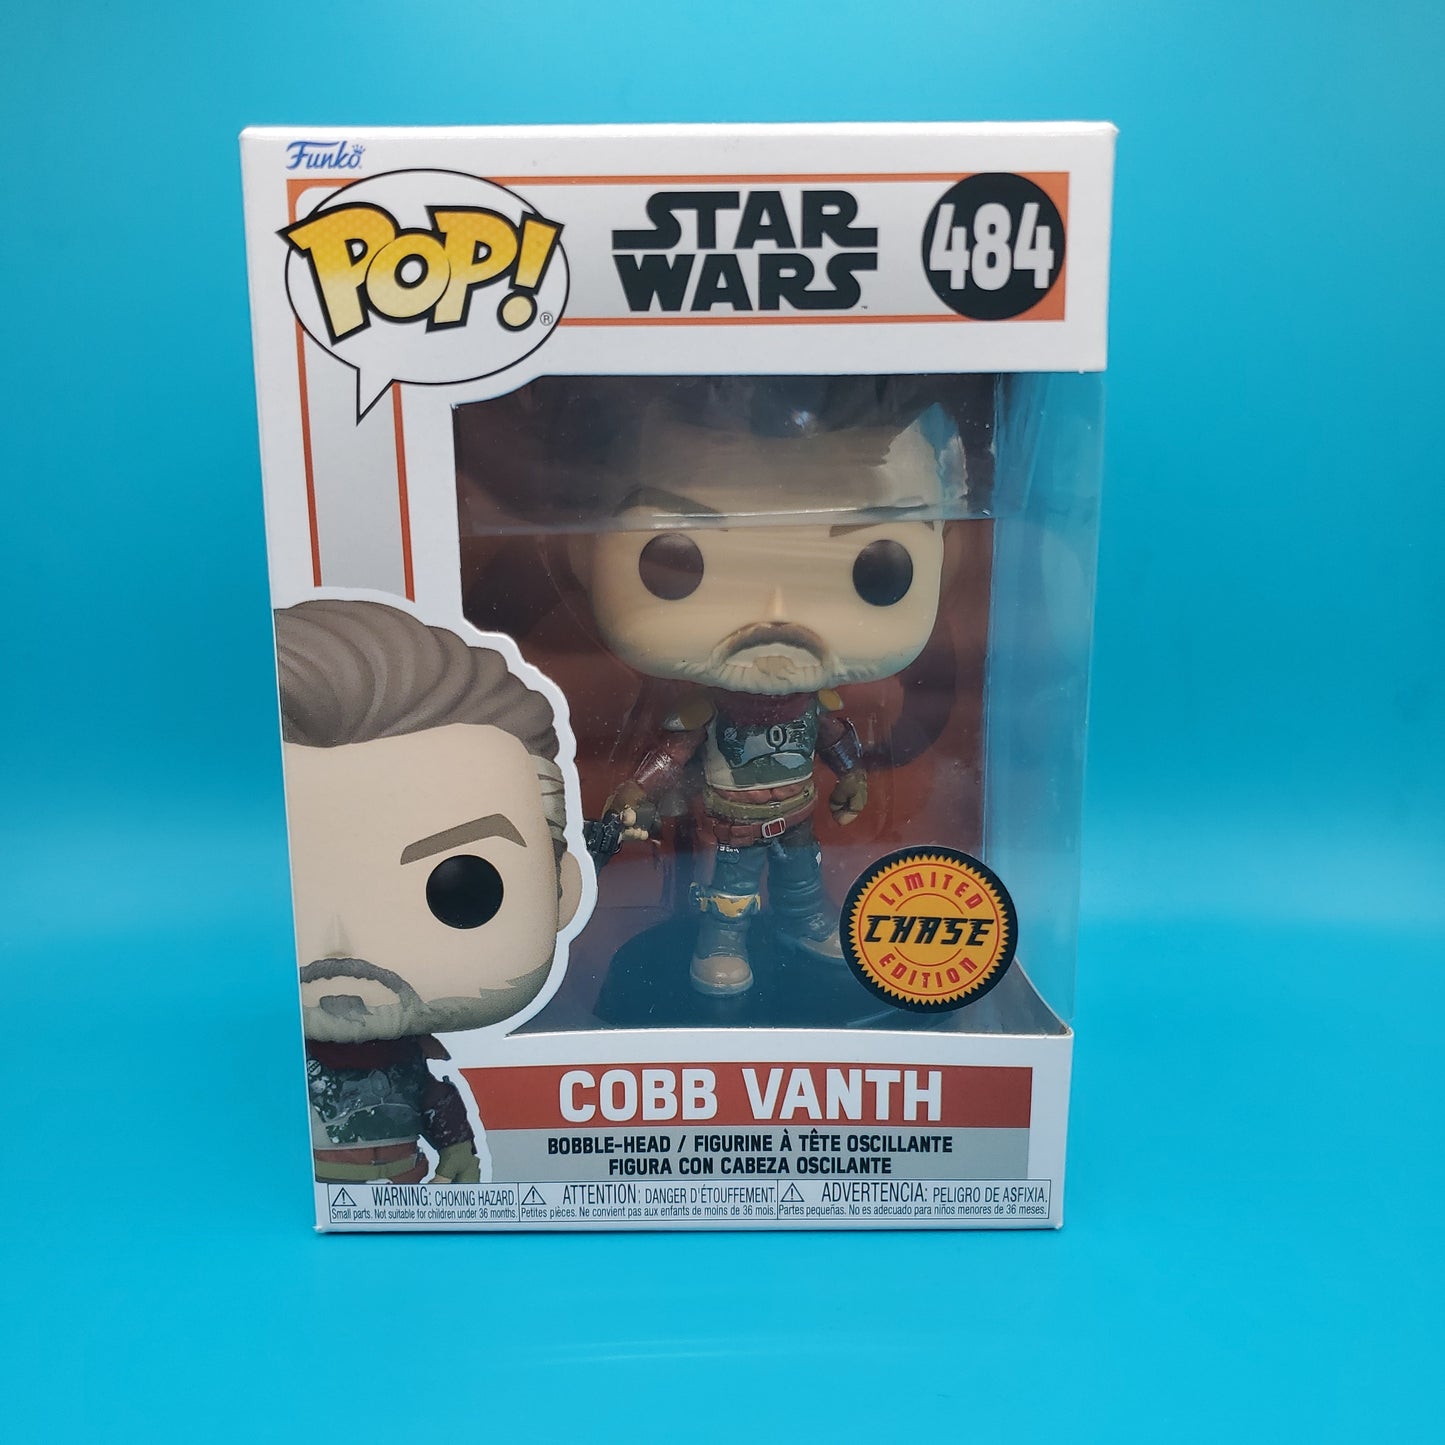 Cobb Vanth - 484 - Chase - Star Wars